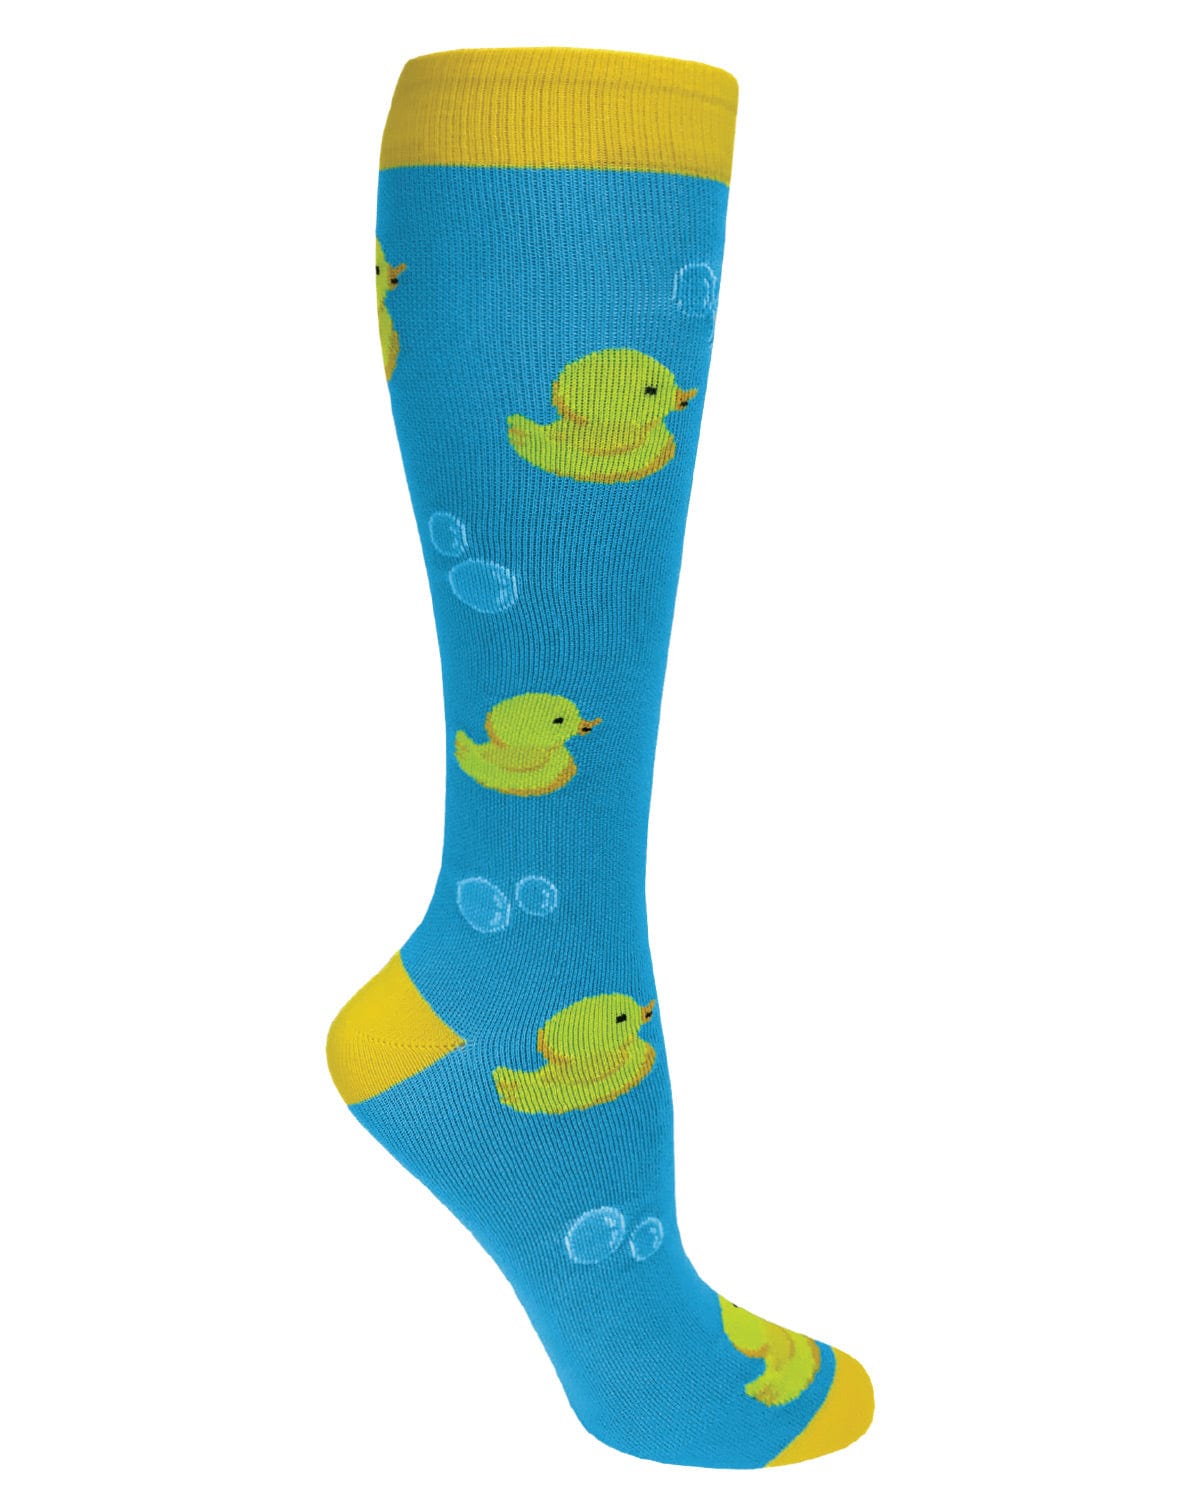 Prestige Medical Socks Yellow Ducks & Bubbles Prestige 30cm Premium Knit Compression Socks